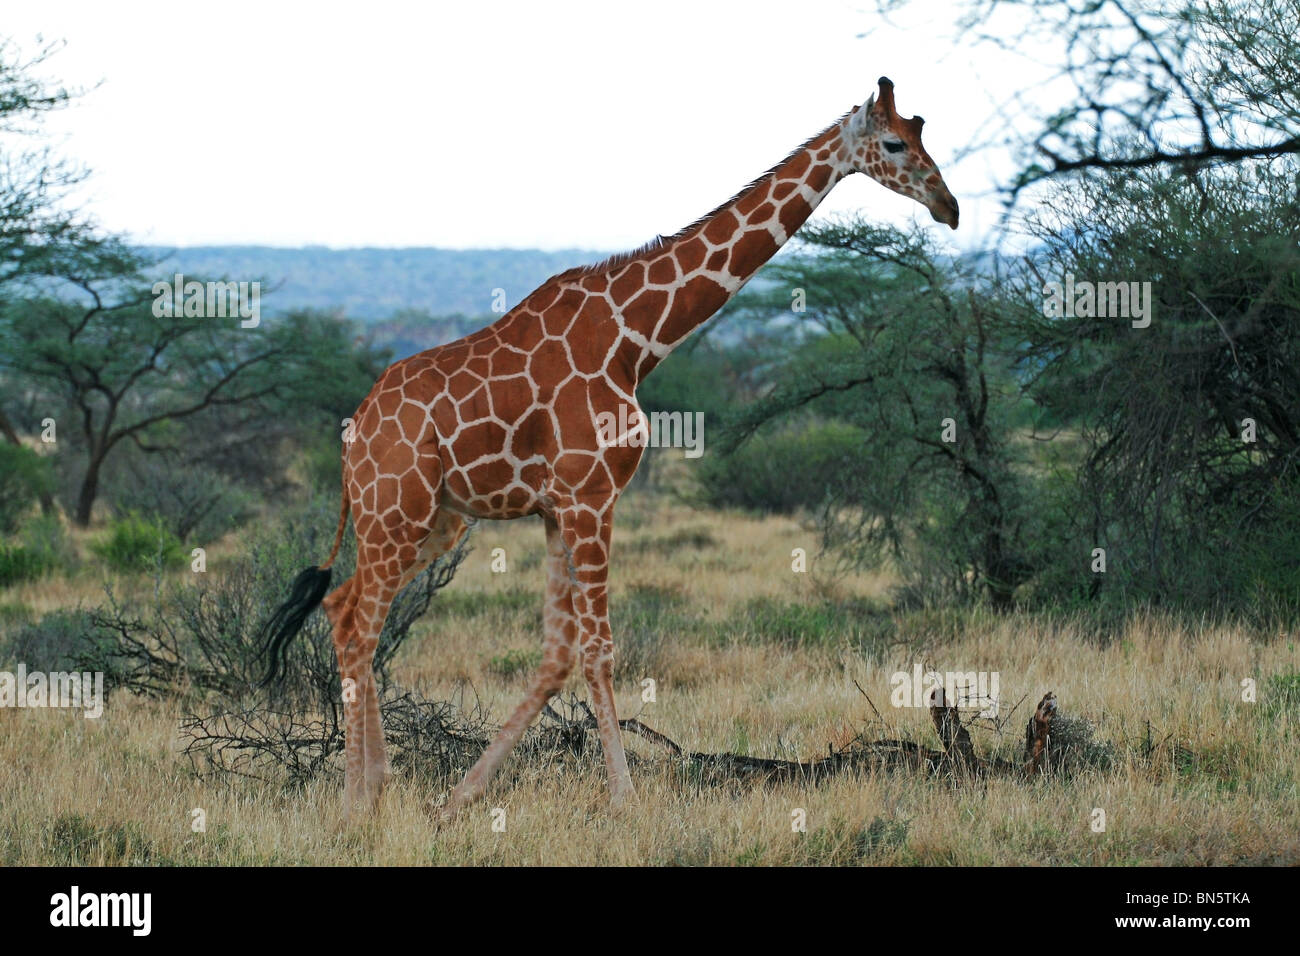 Reticulated Giraffe walking tall. Picture taken in Samburu Game Reserve, Kenya, East Africa. Stock Photo